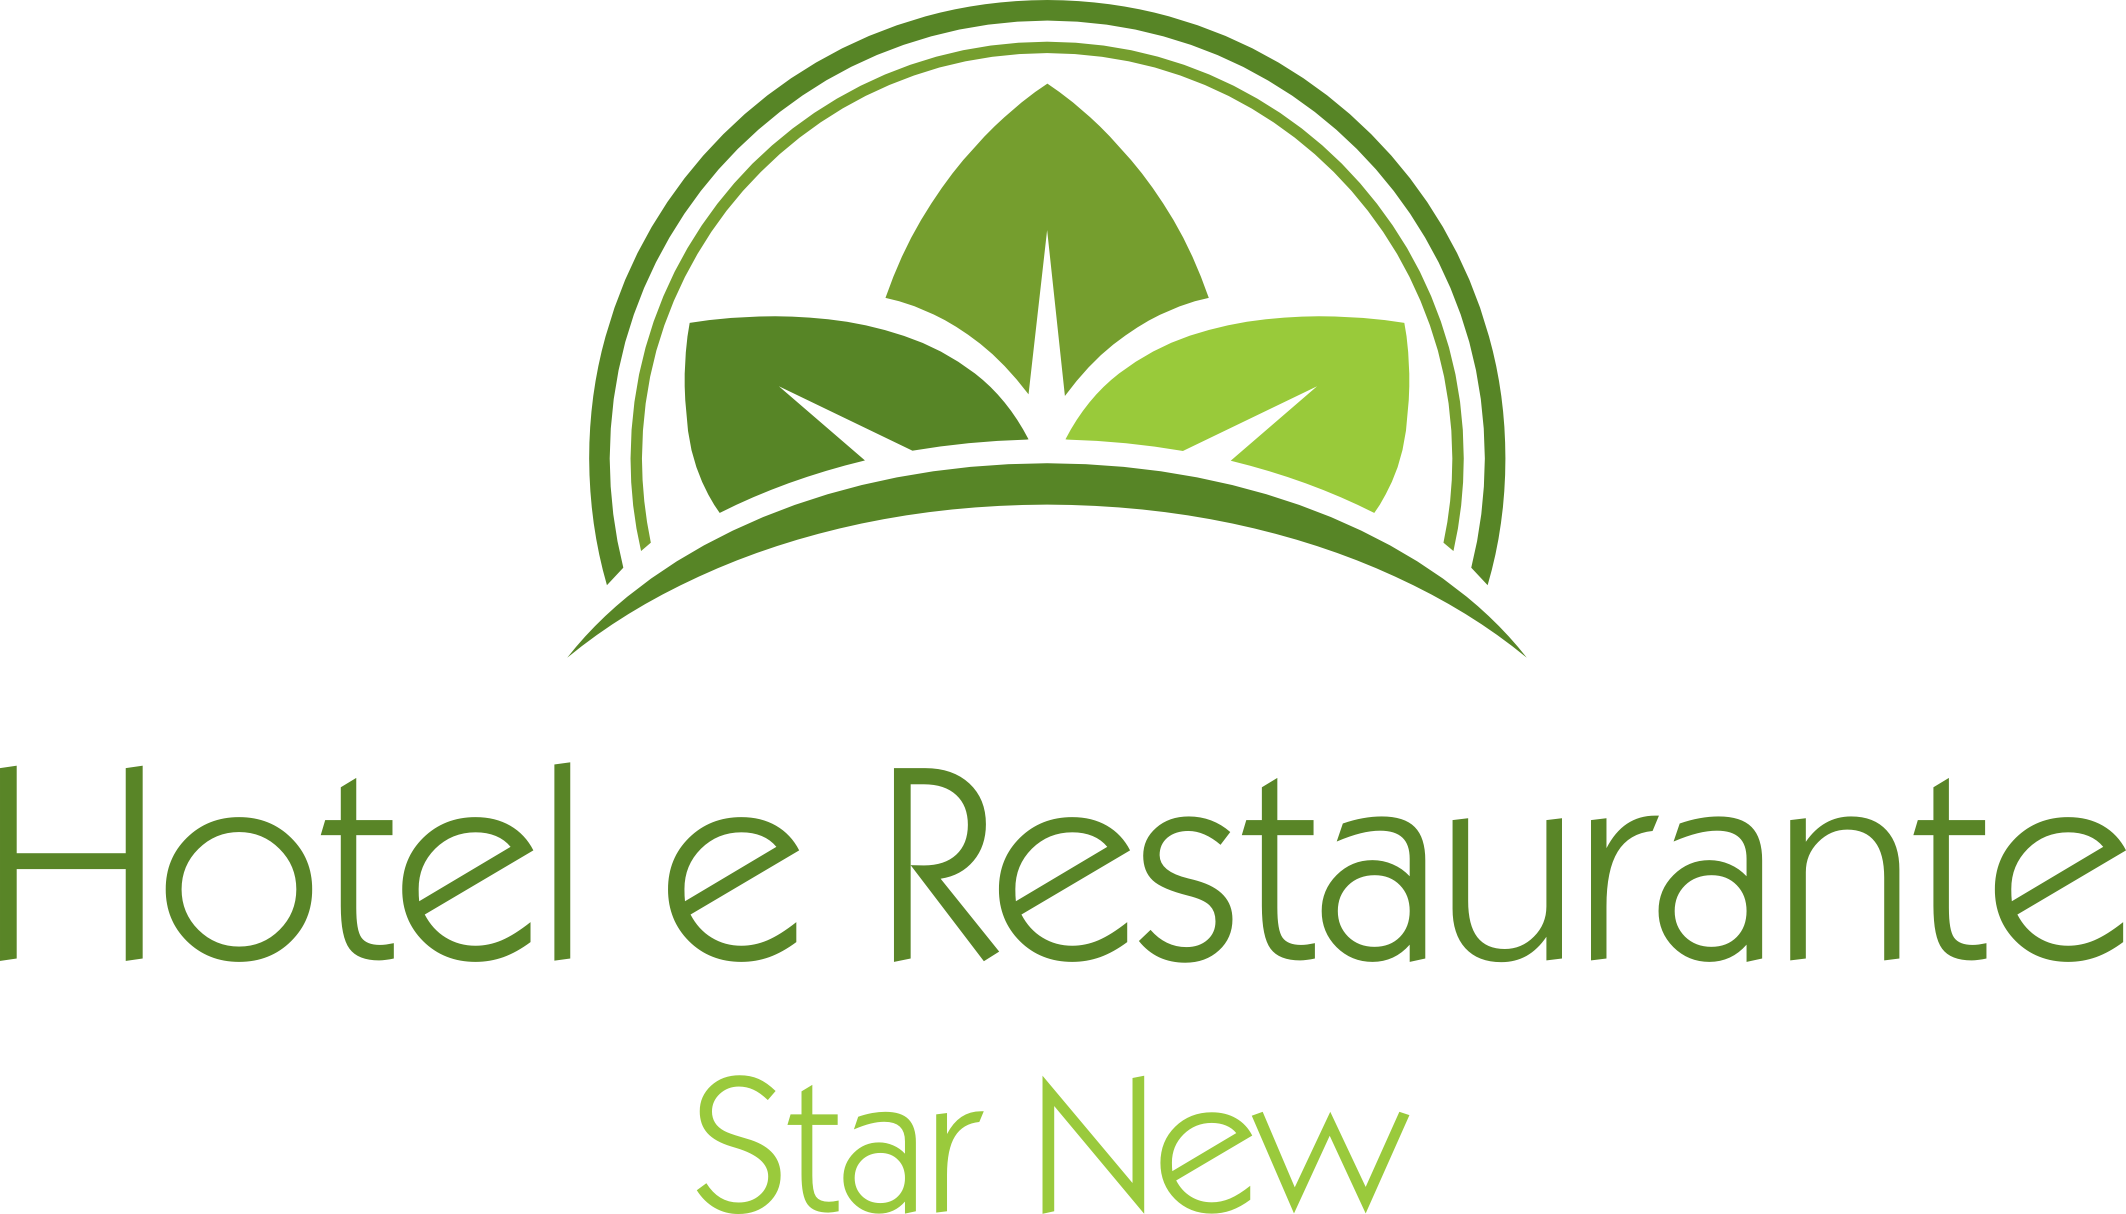 Hotel e Restaurante Star New - Loja Online